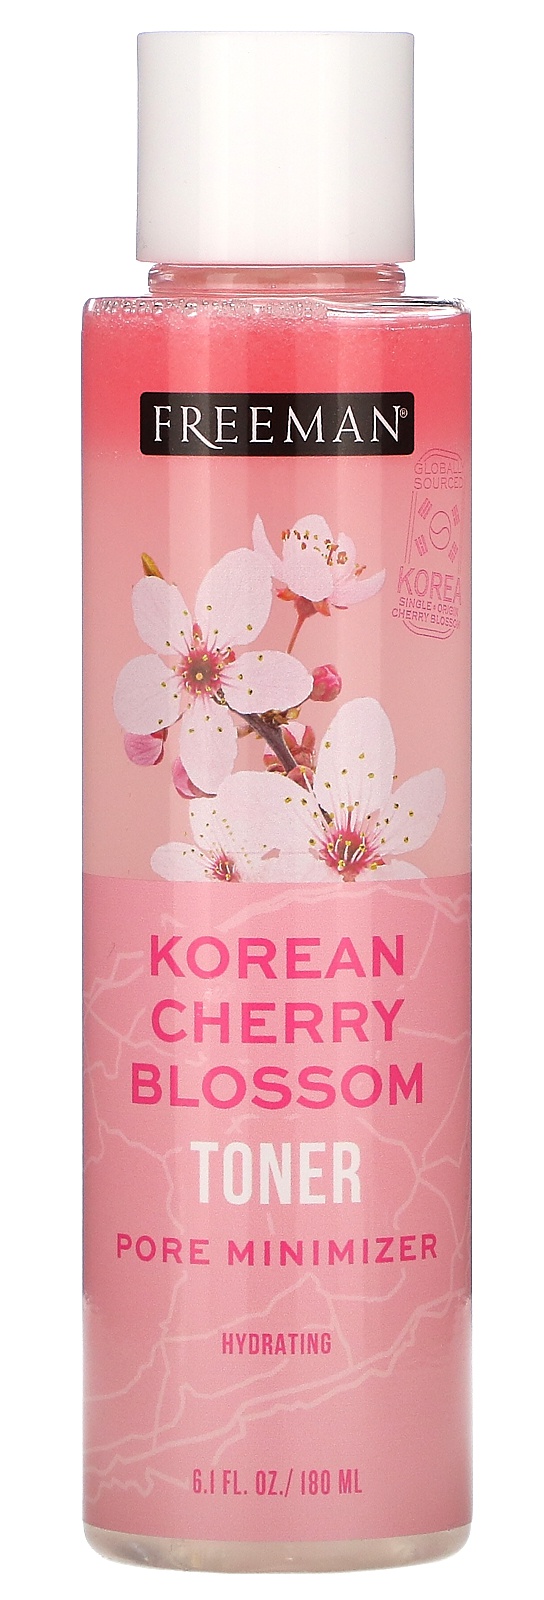 Freeman Korean Cherry Blossom Toner